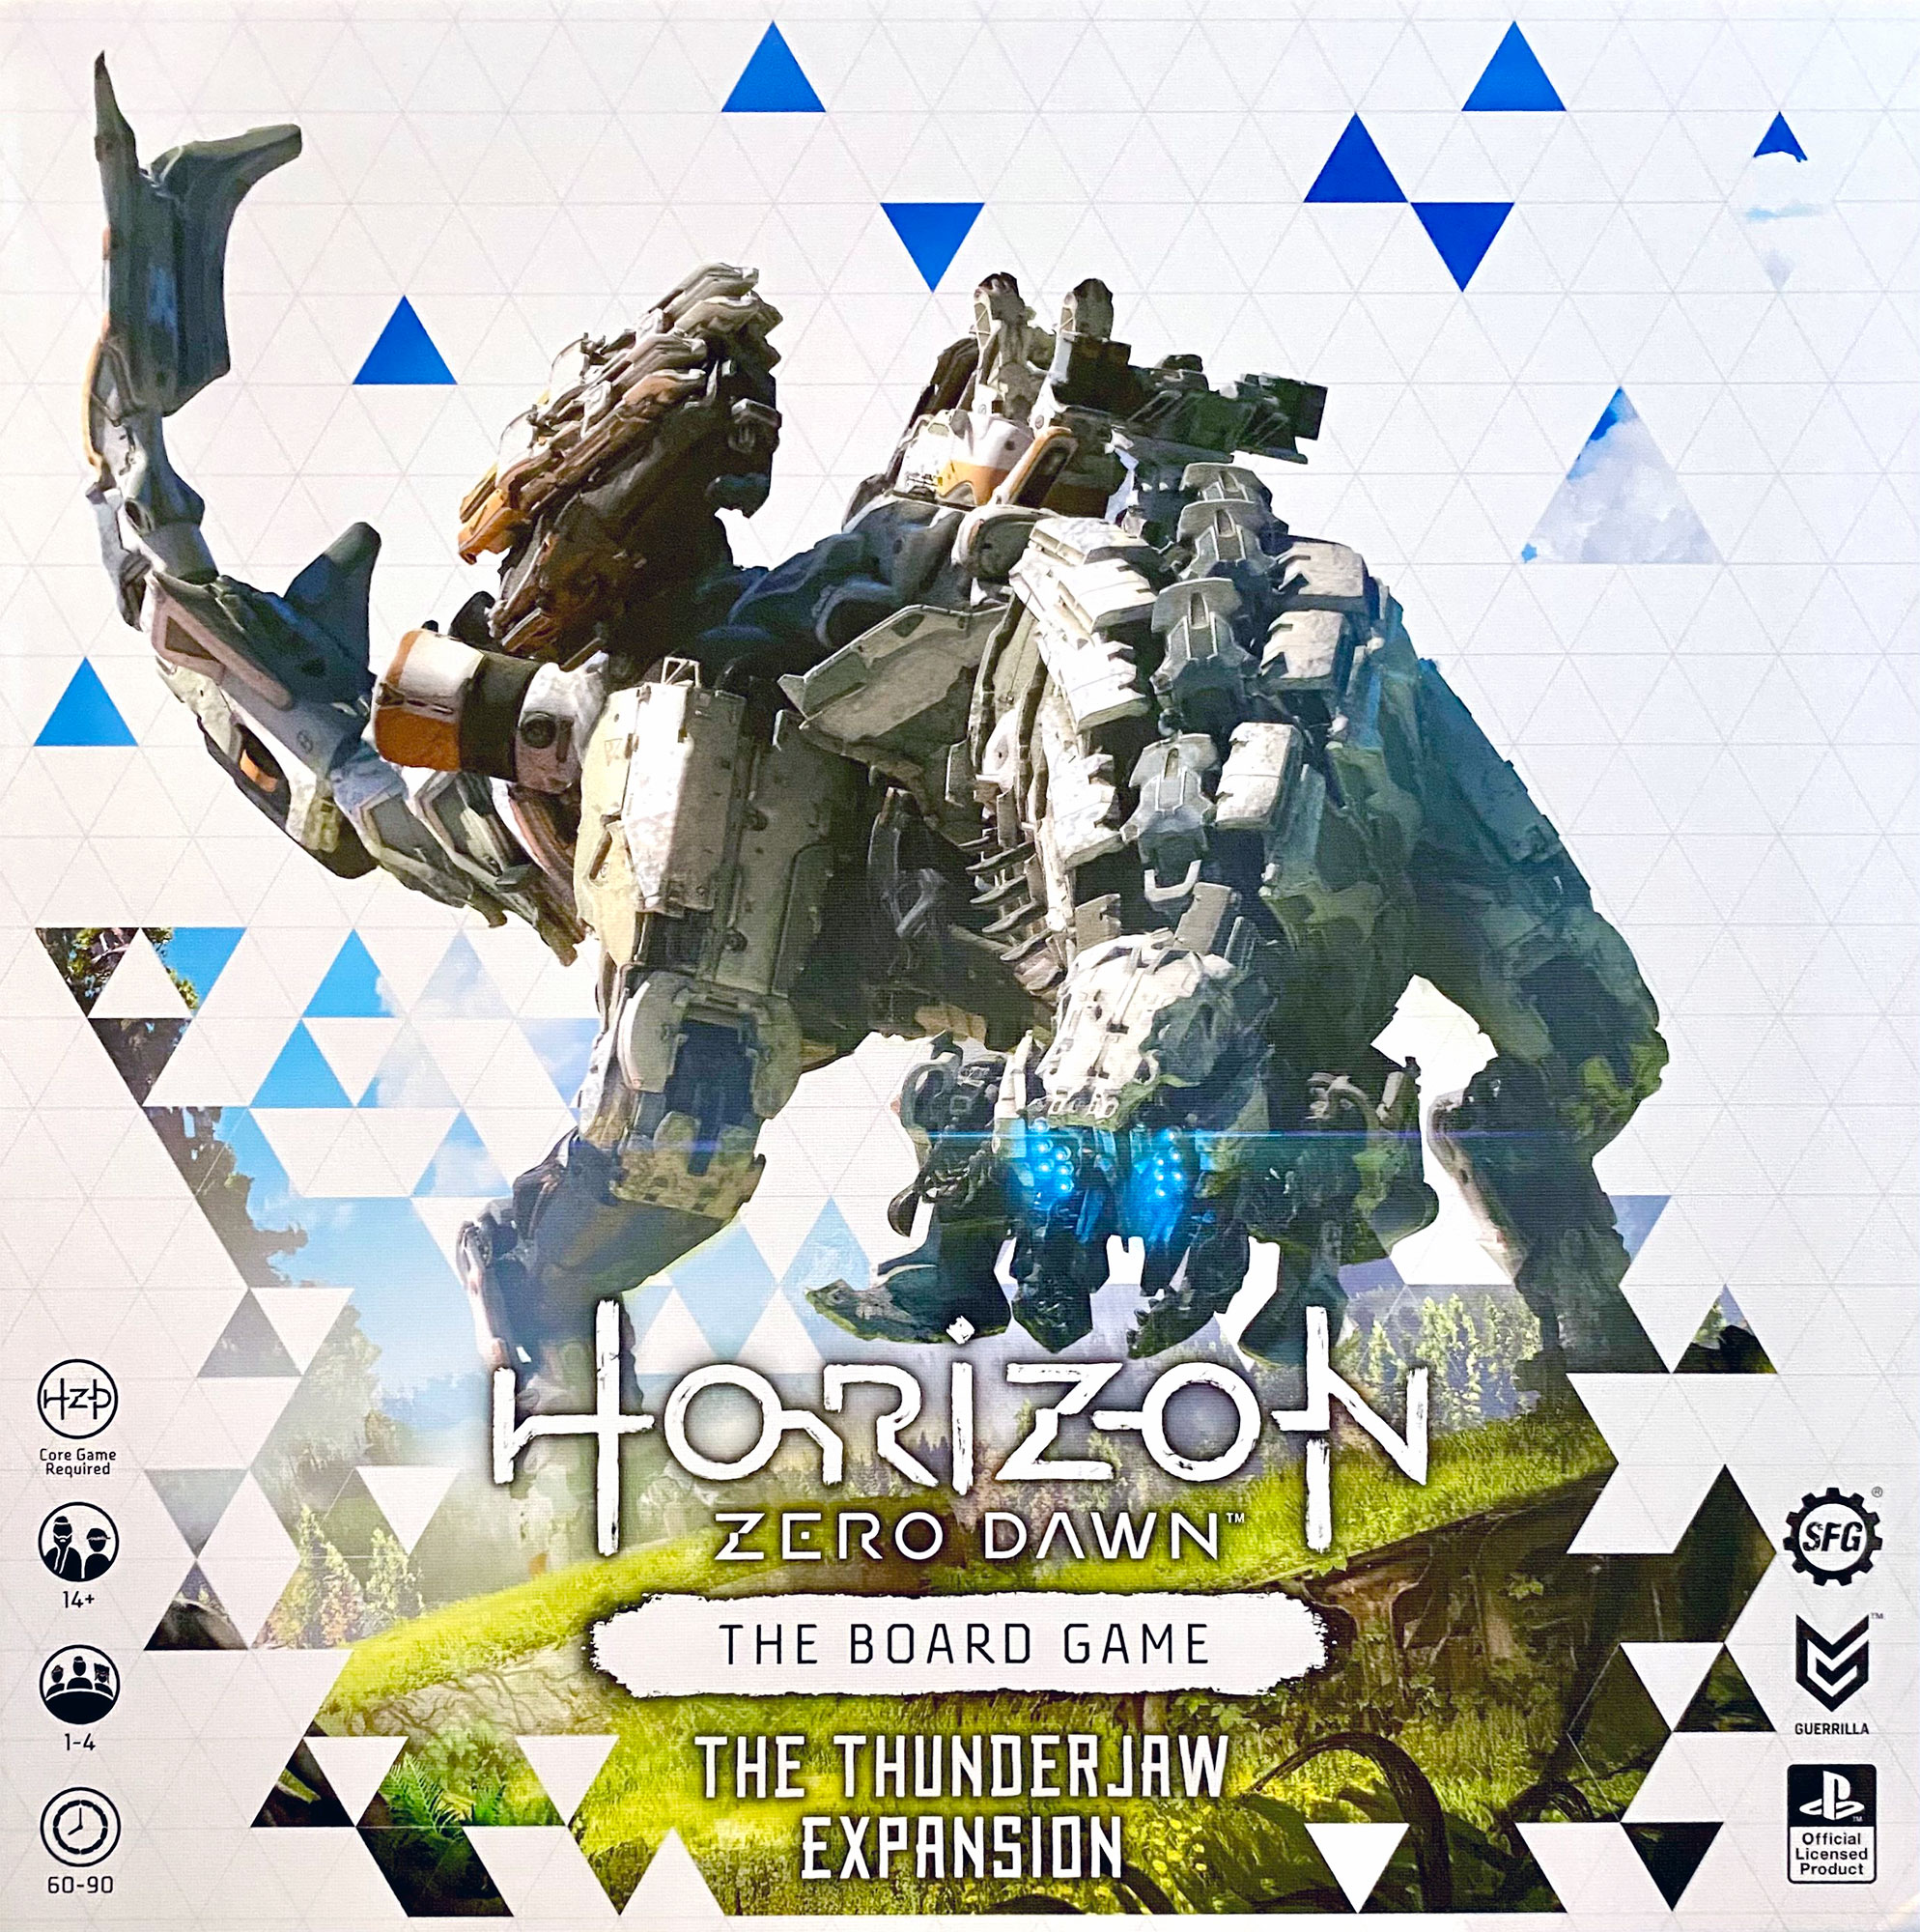 Horizon Zero Dawn 2 - FIRST LOOK AT HUGE MACHINE That We Will Be